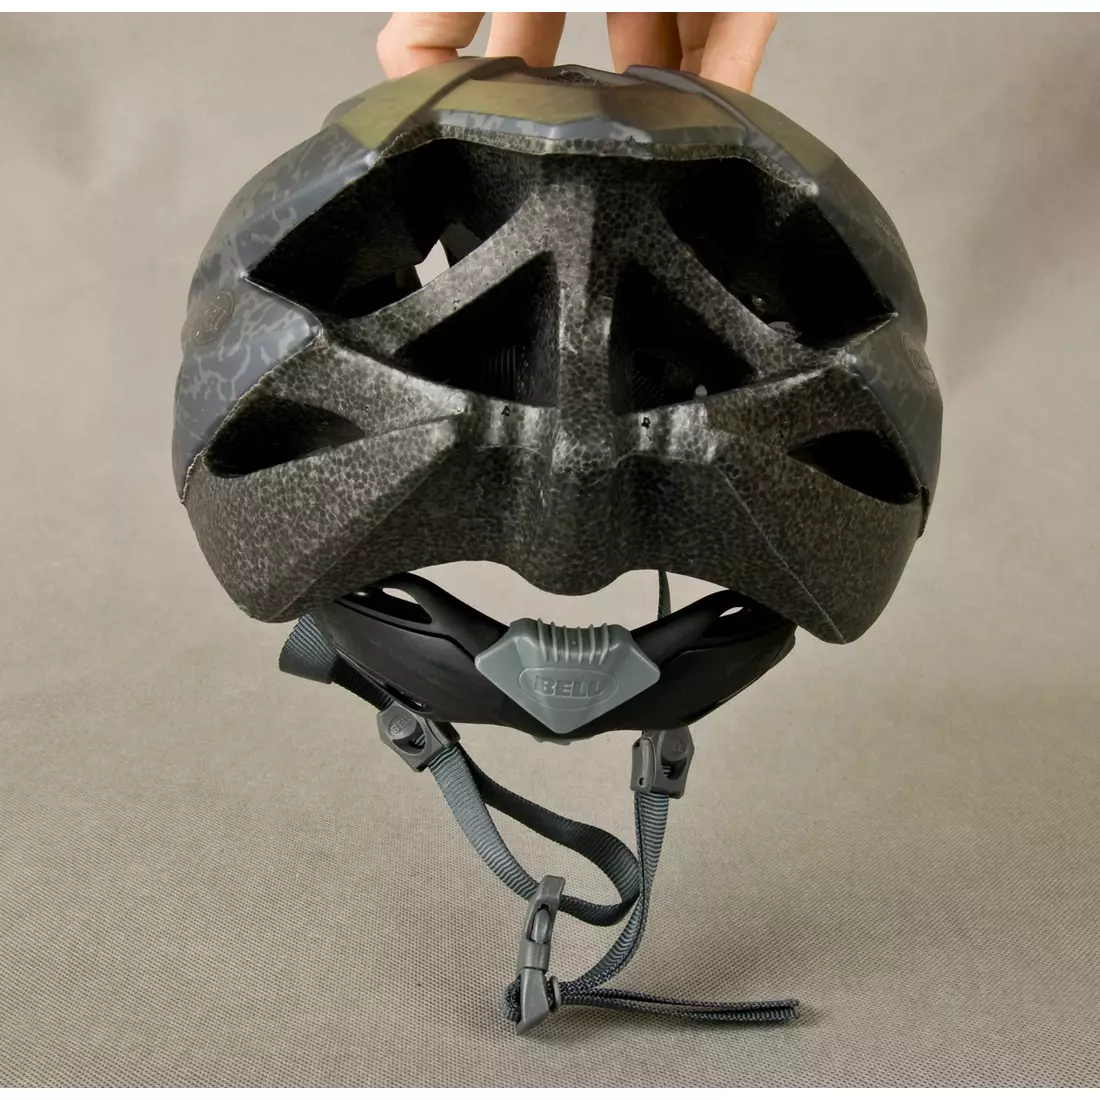 BELL XLP titanium bicycle helmet